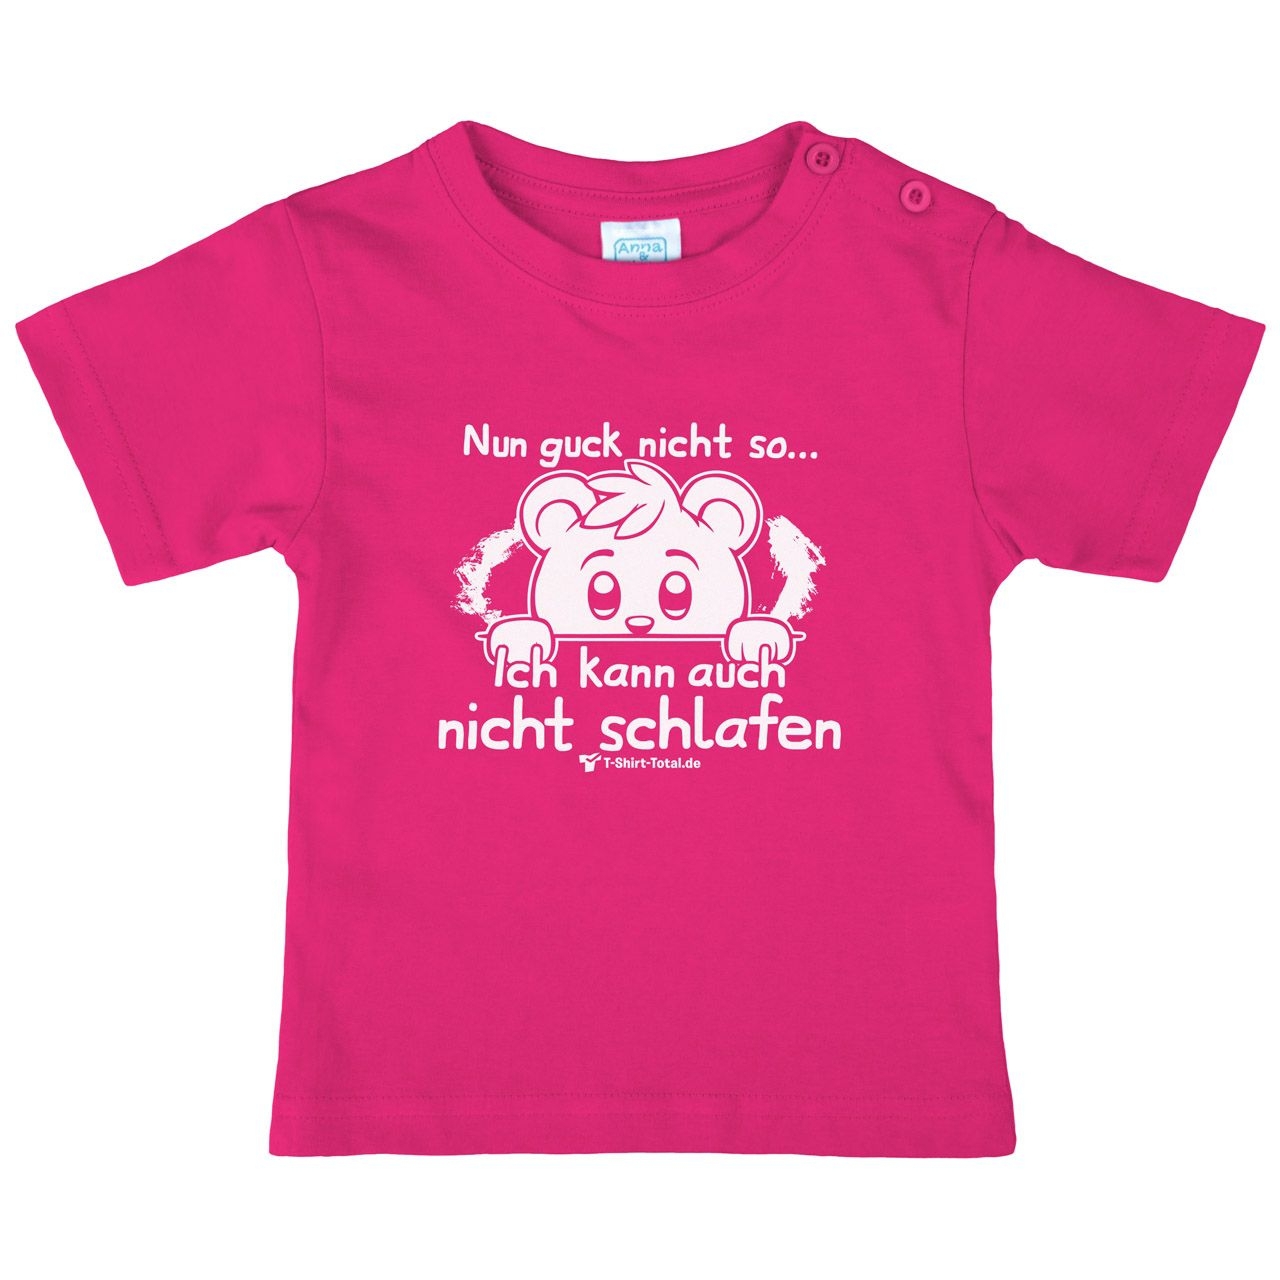 Guck nicht so Kinder T-Shirt pink 68 / 74